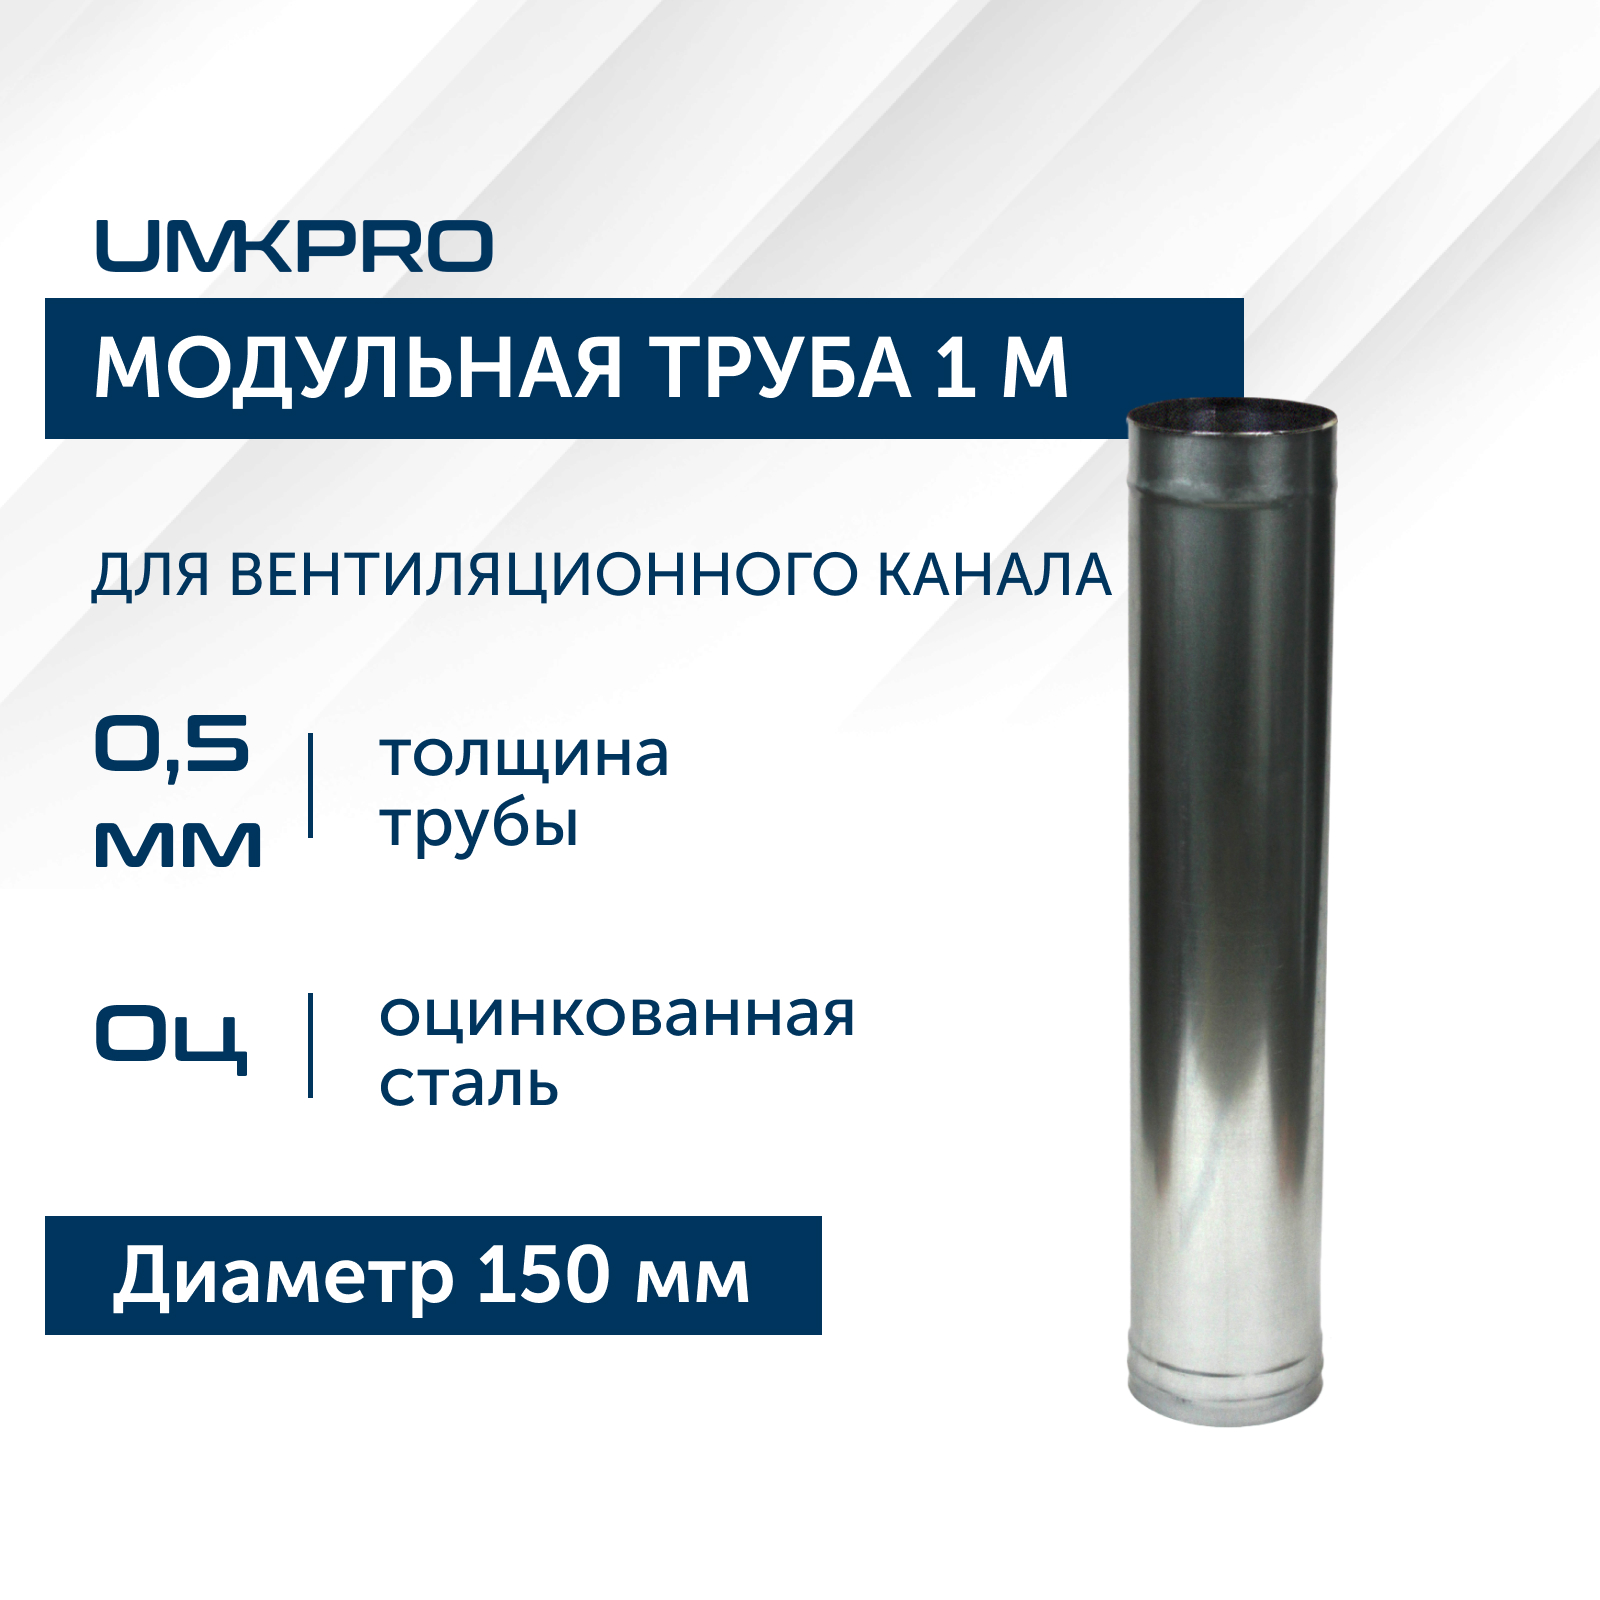 Труба модульная для дымохода 1 м UMKPRO, D 150, Оц/0,5мм